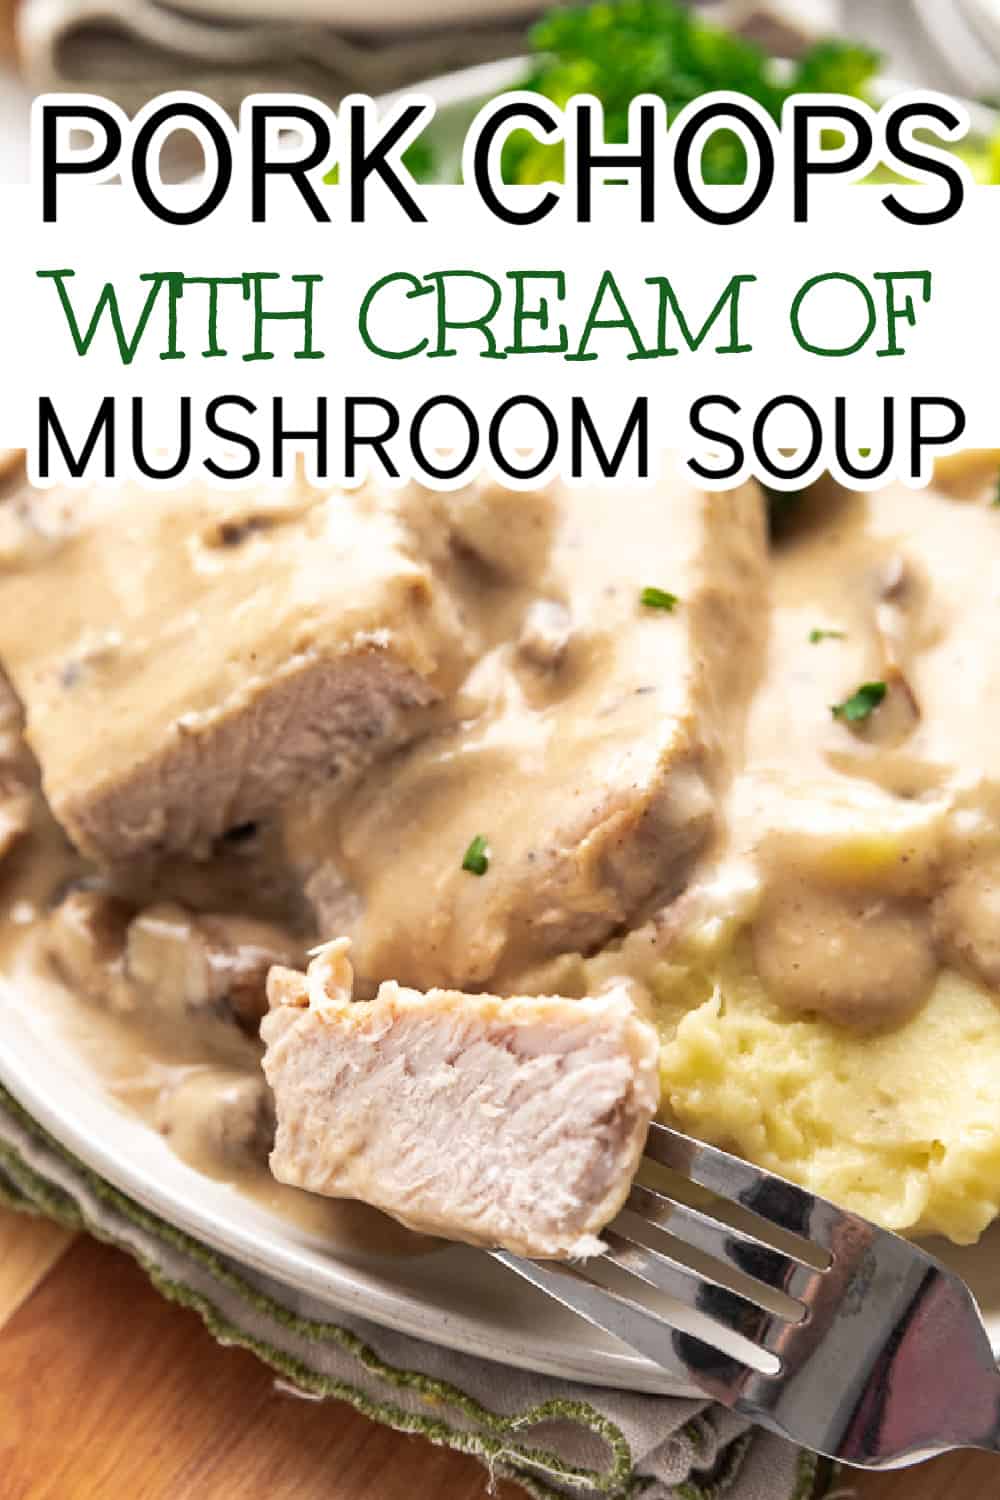 Cream Of Mushroom Pork Chops